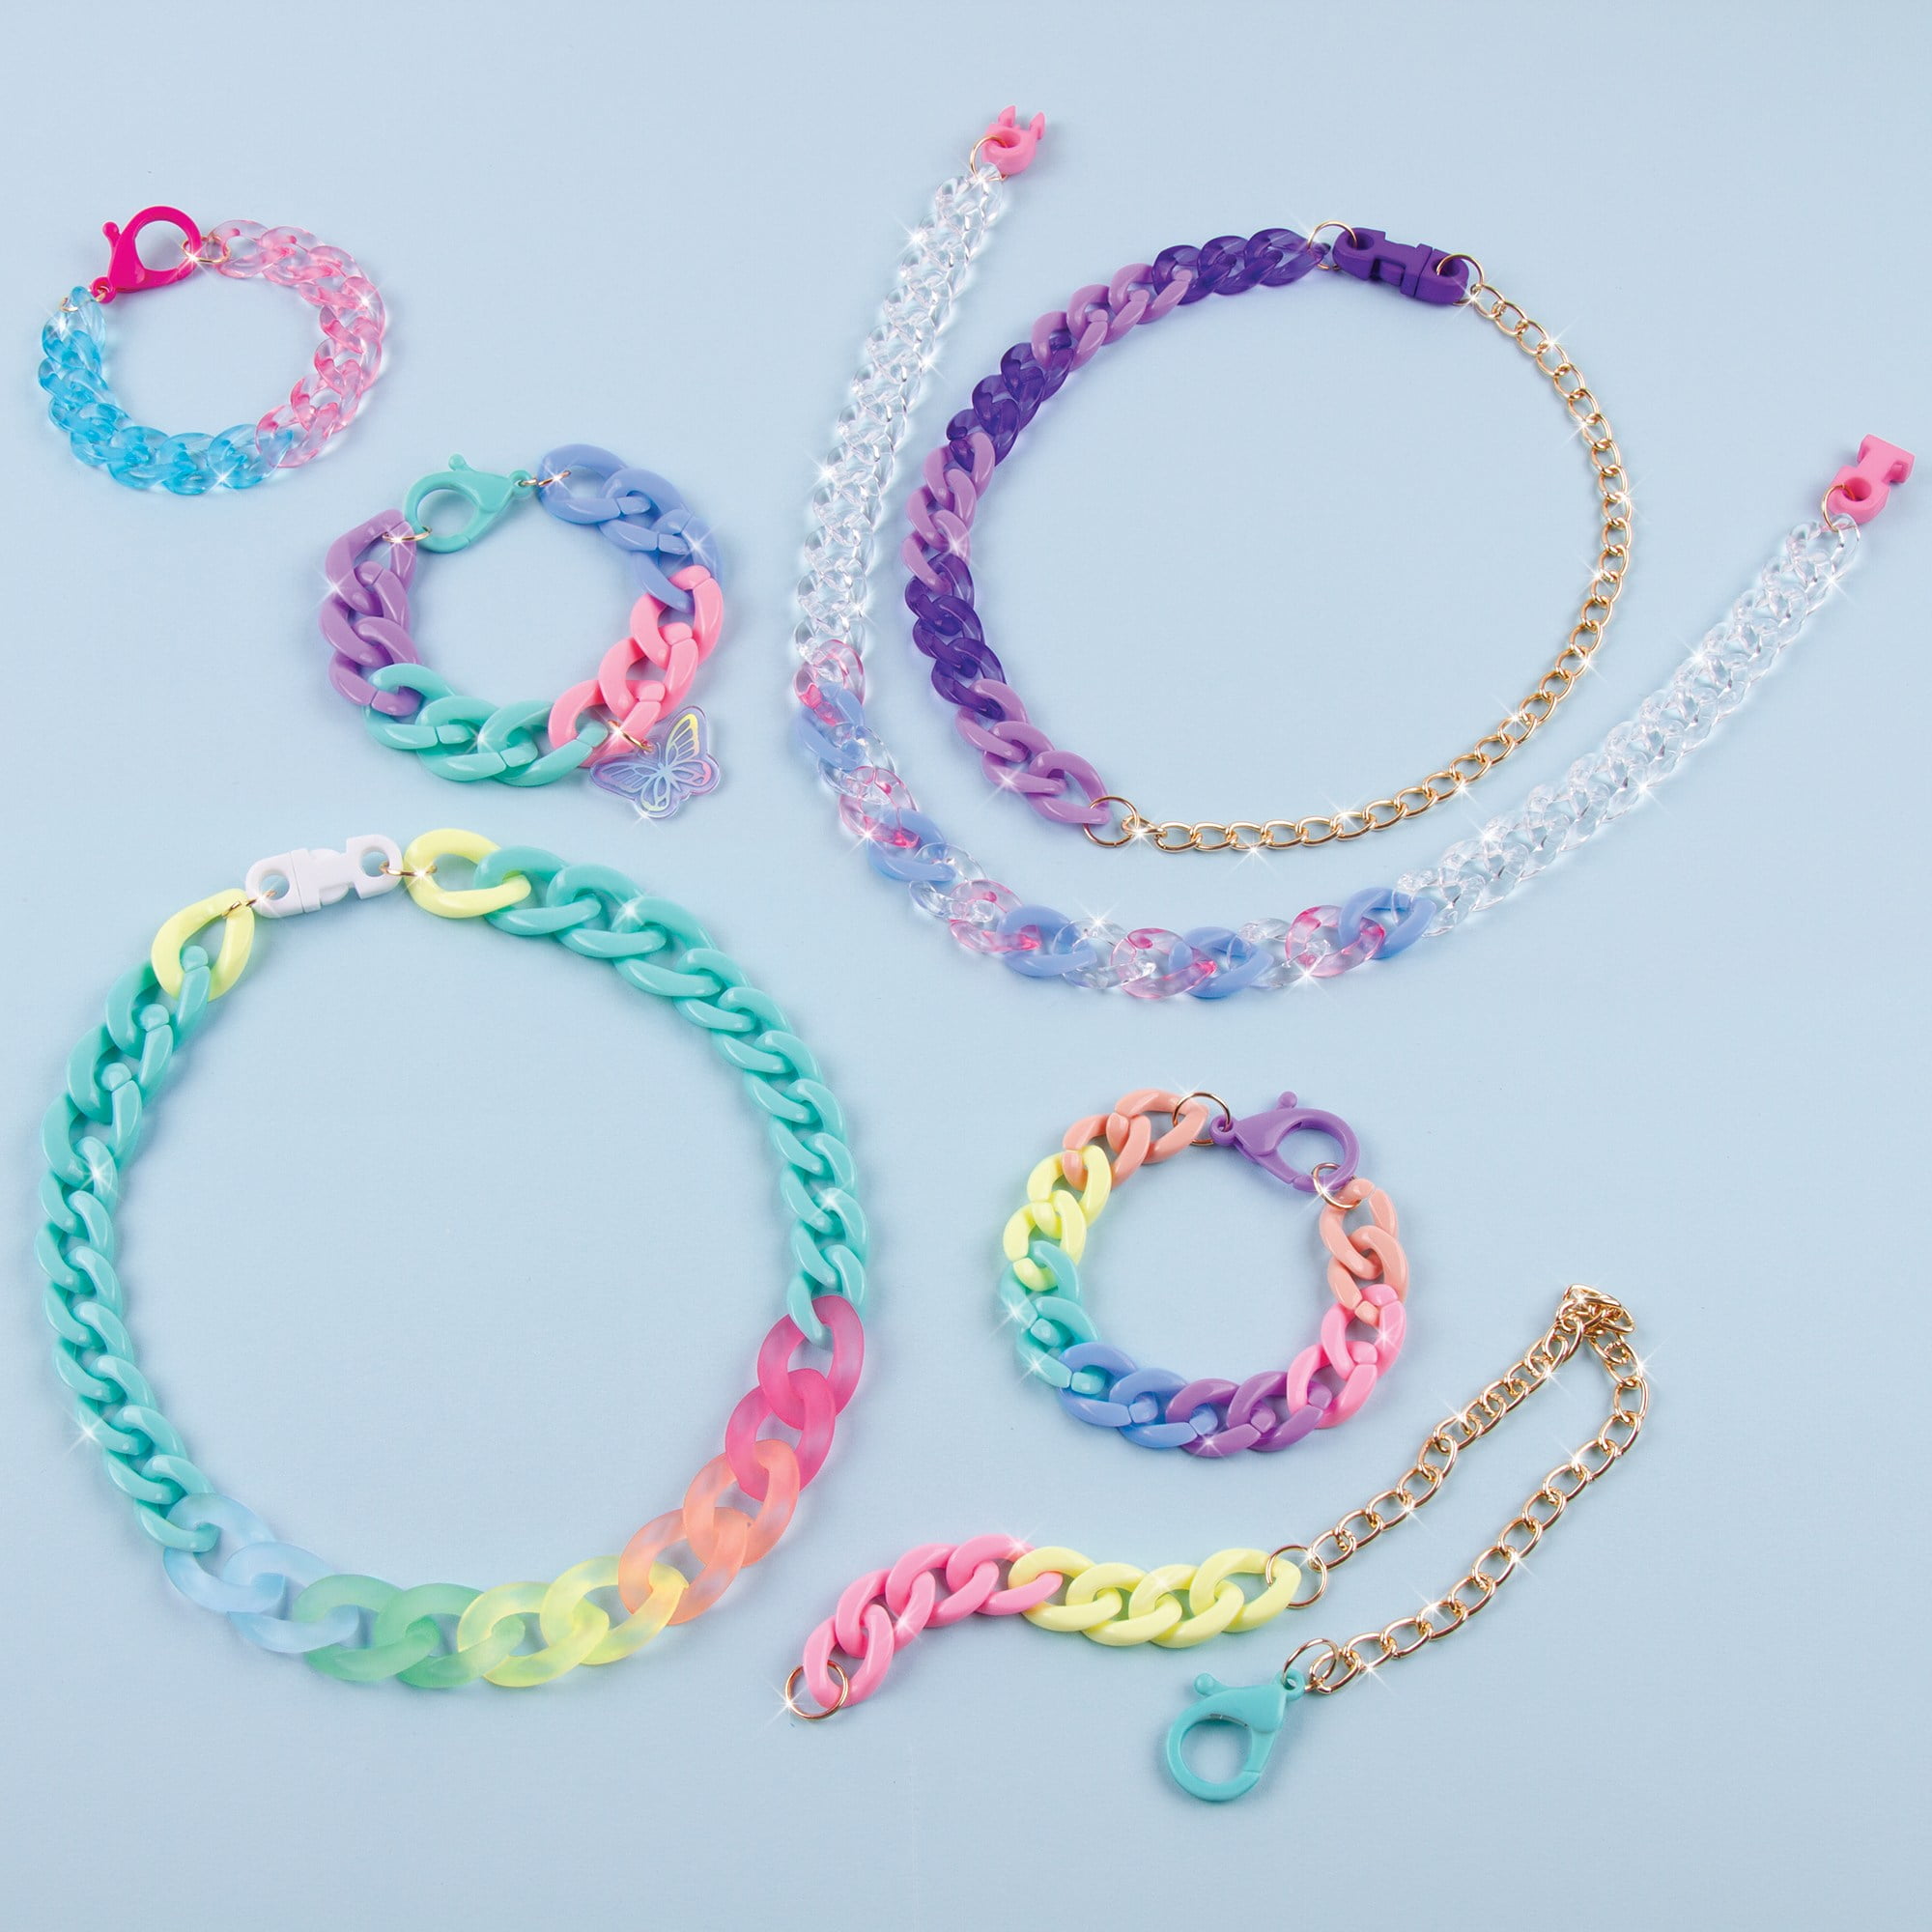 Style Me Up! - Kids Fashion Wristbands Making Kit - Girls DIY Plastic  Bracelet S | eBay